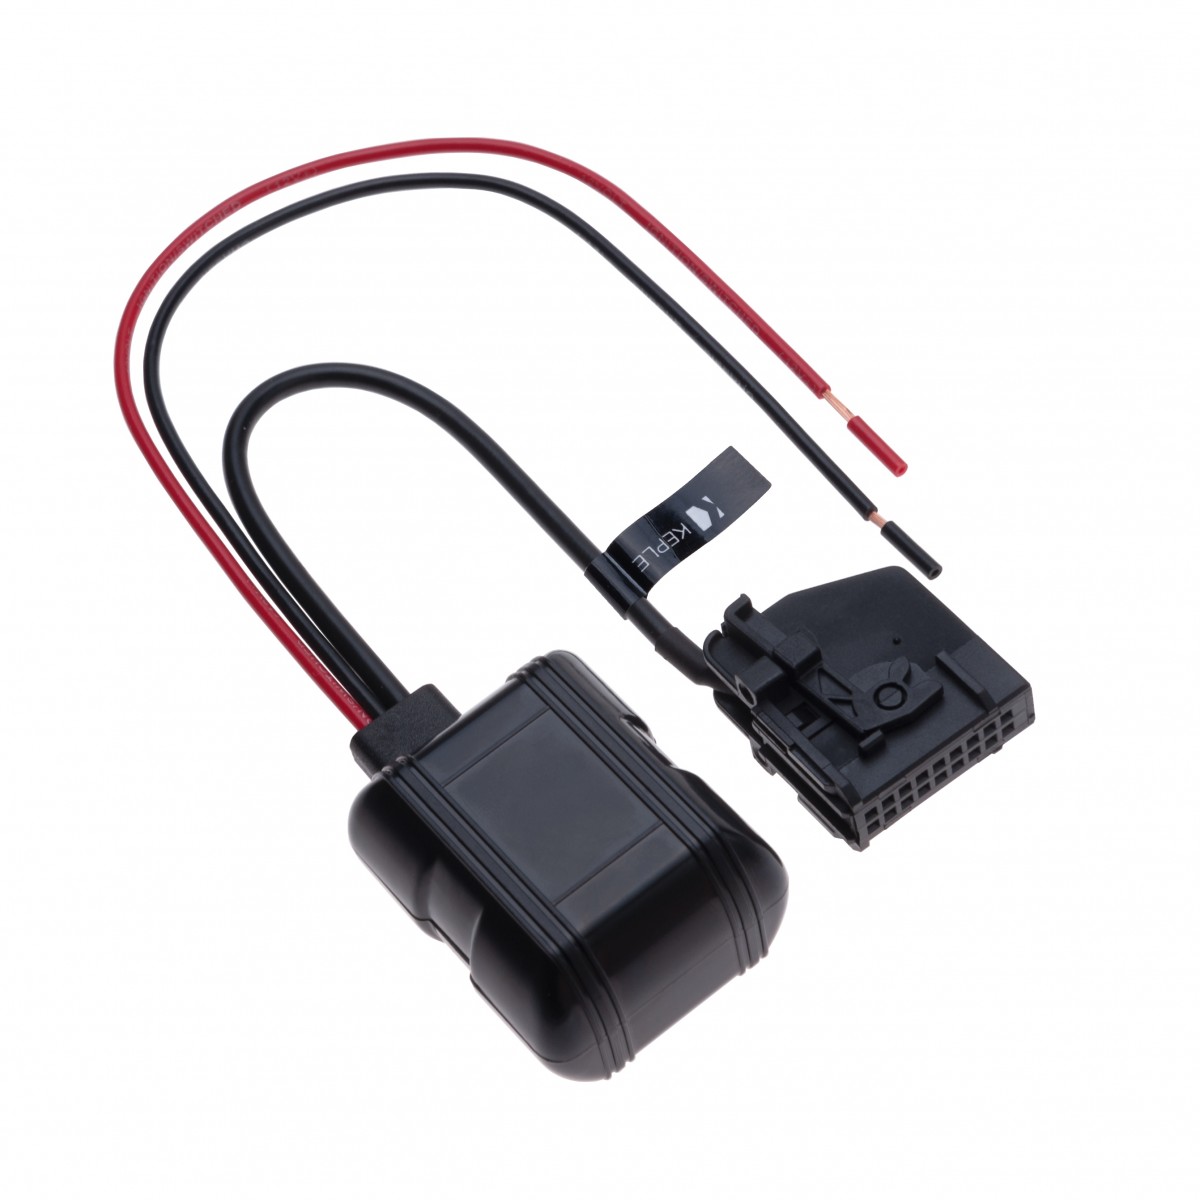 Bluetooth Adapter Aux Cable Fits Mercedes Benz Audio W203 W209 W164 W208 W211 